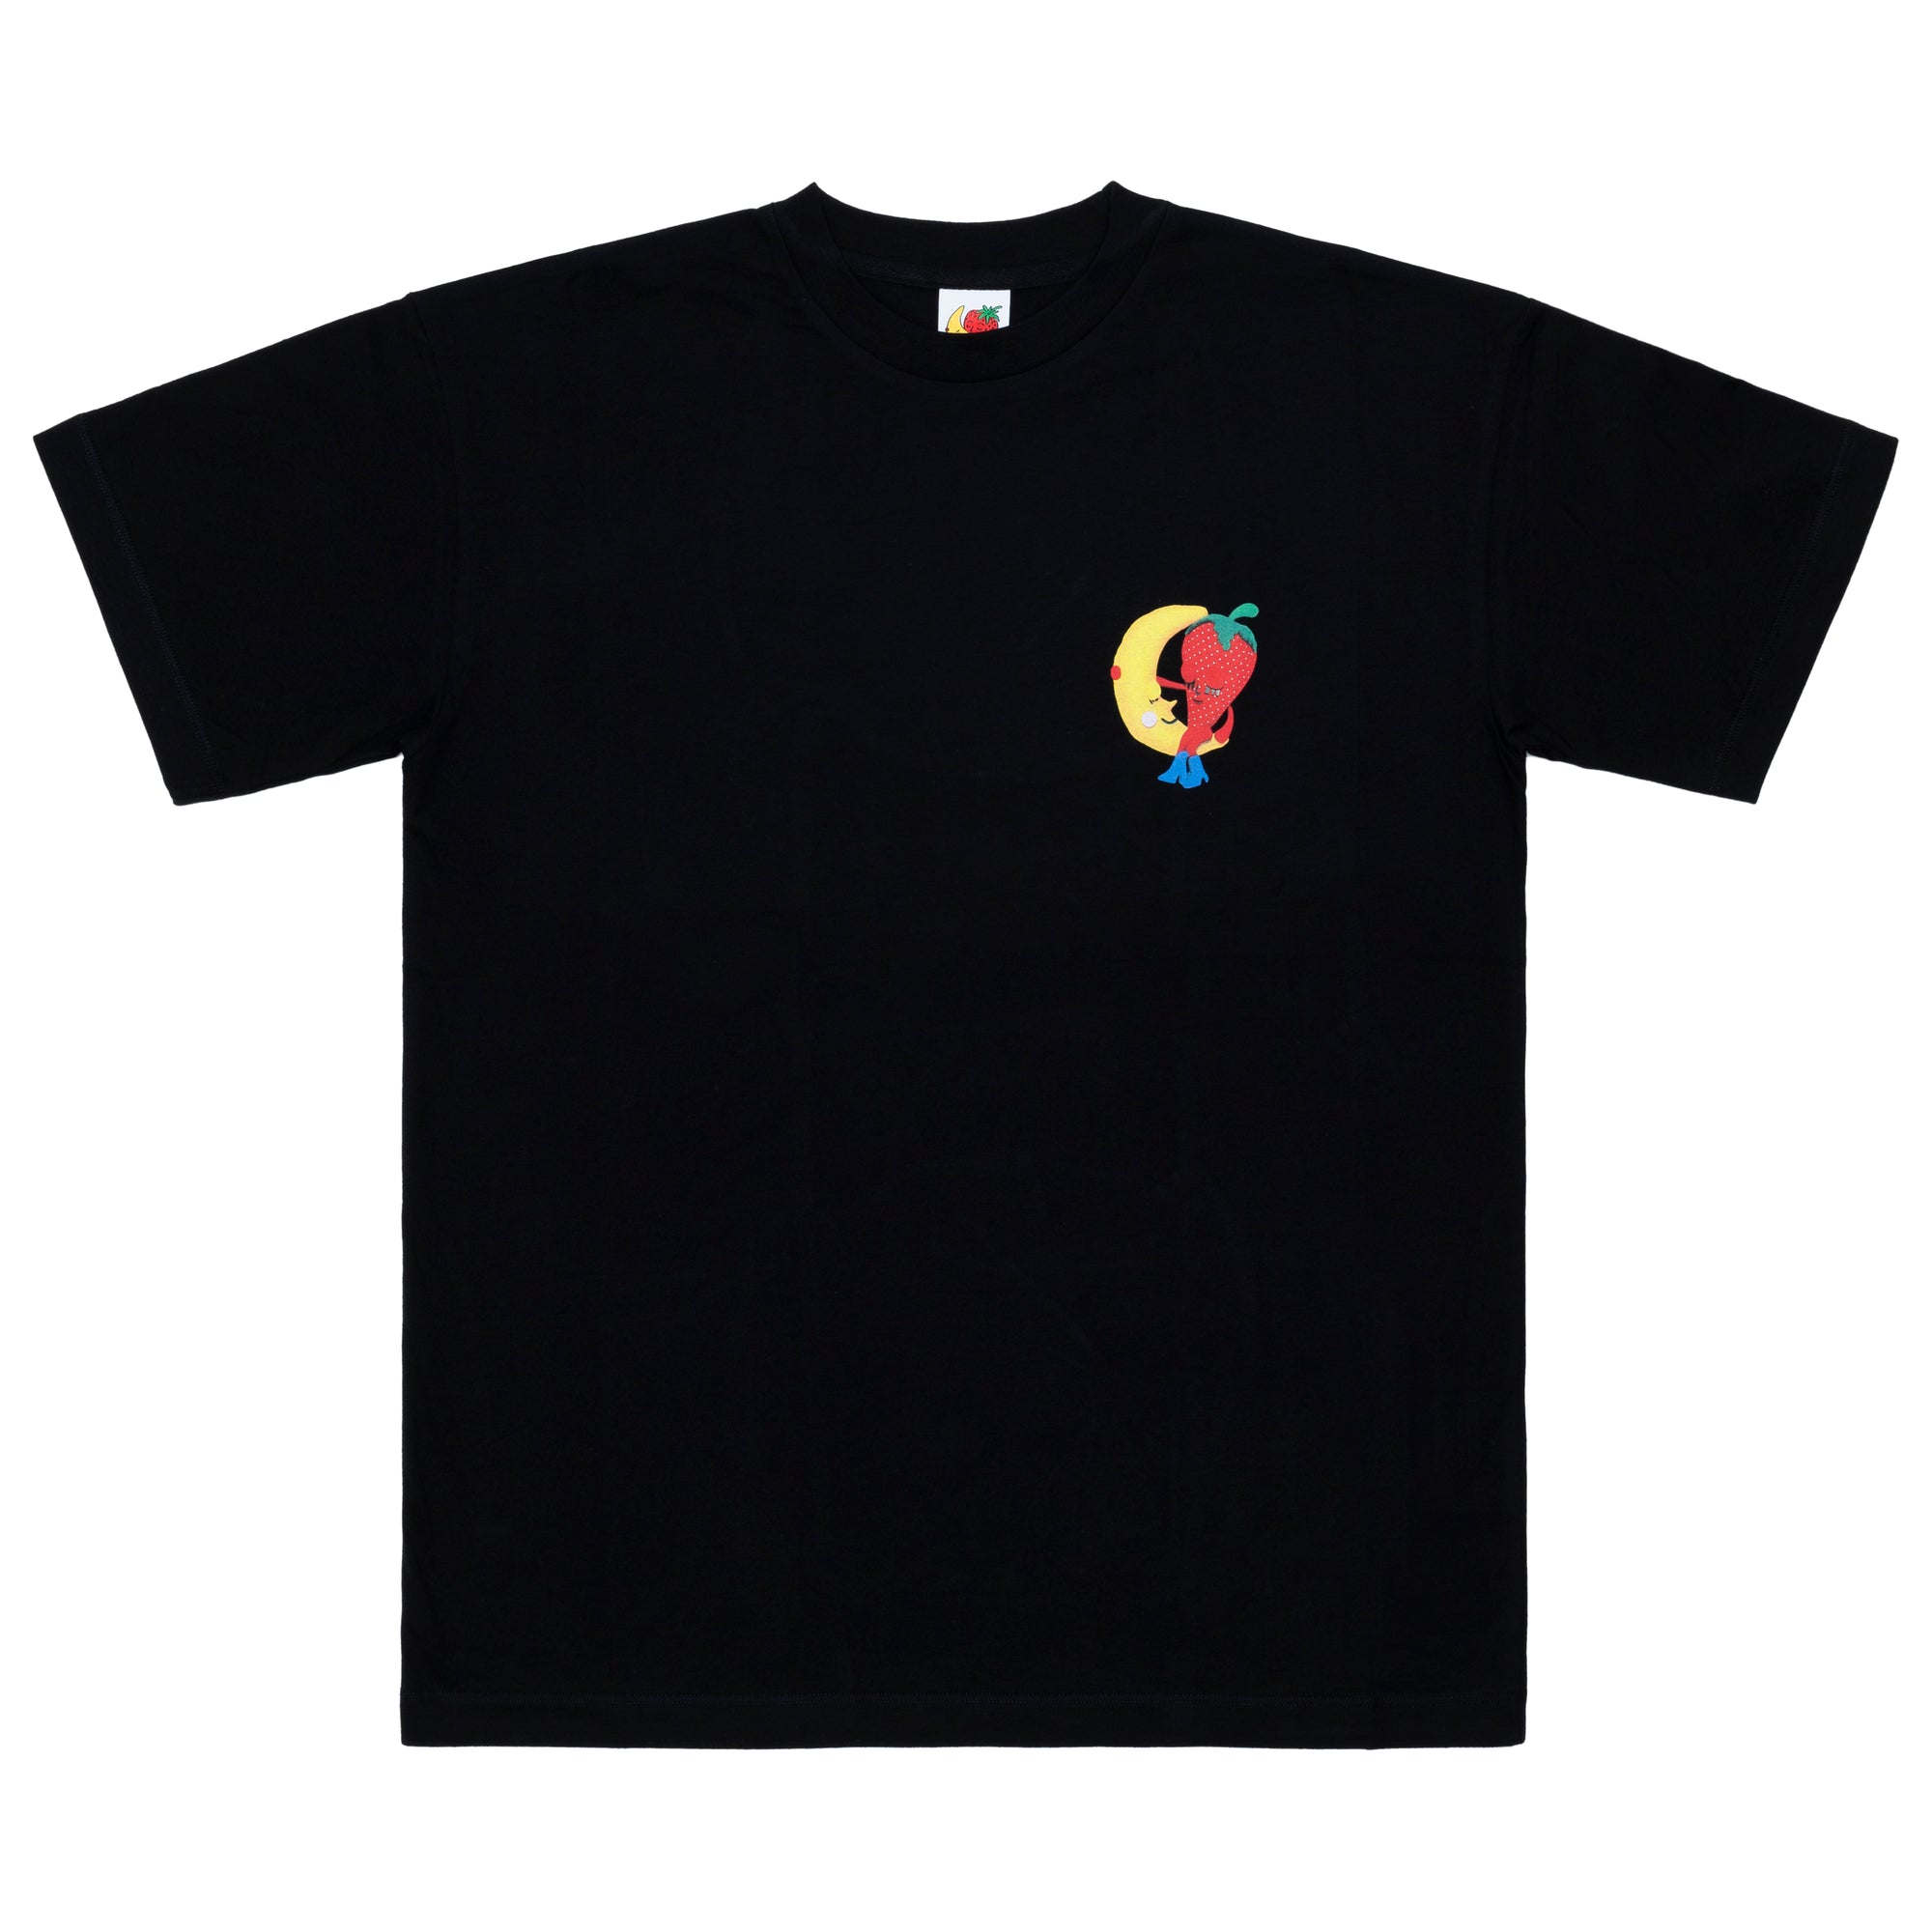 Sky High Farm Workwear - Perennial Shana Graphic T-Shirt - (Black) view 1